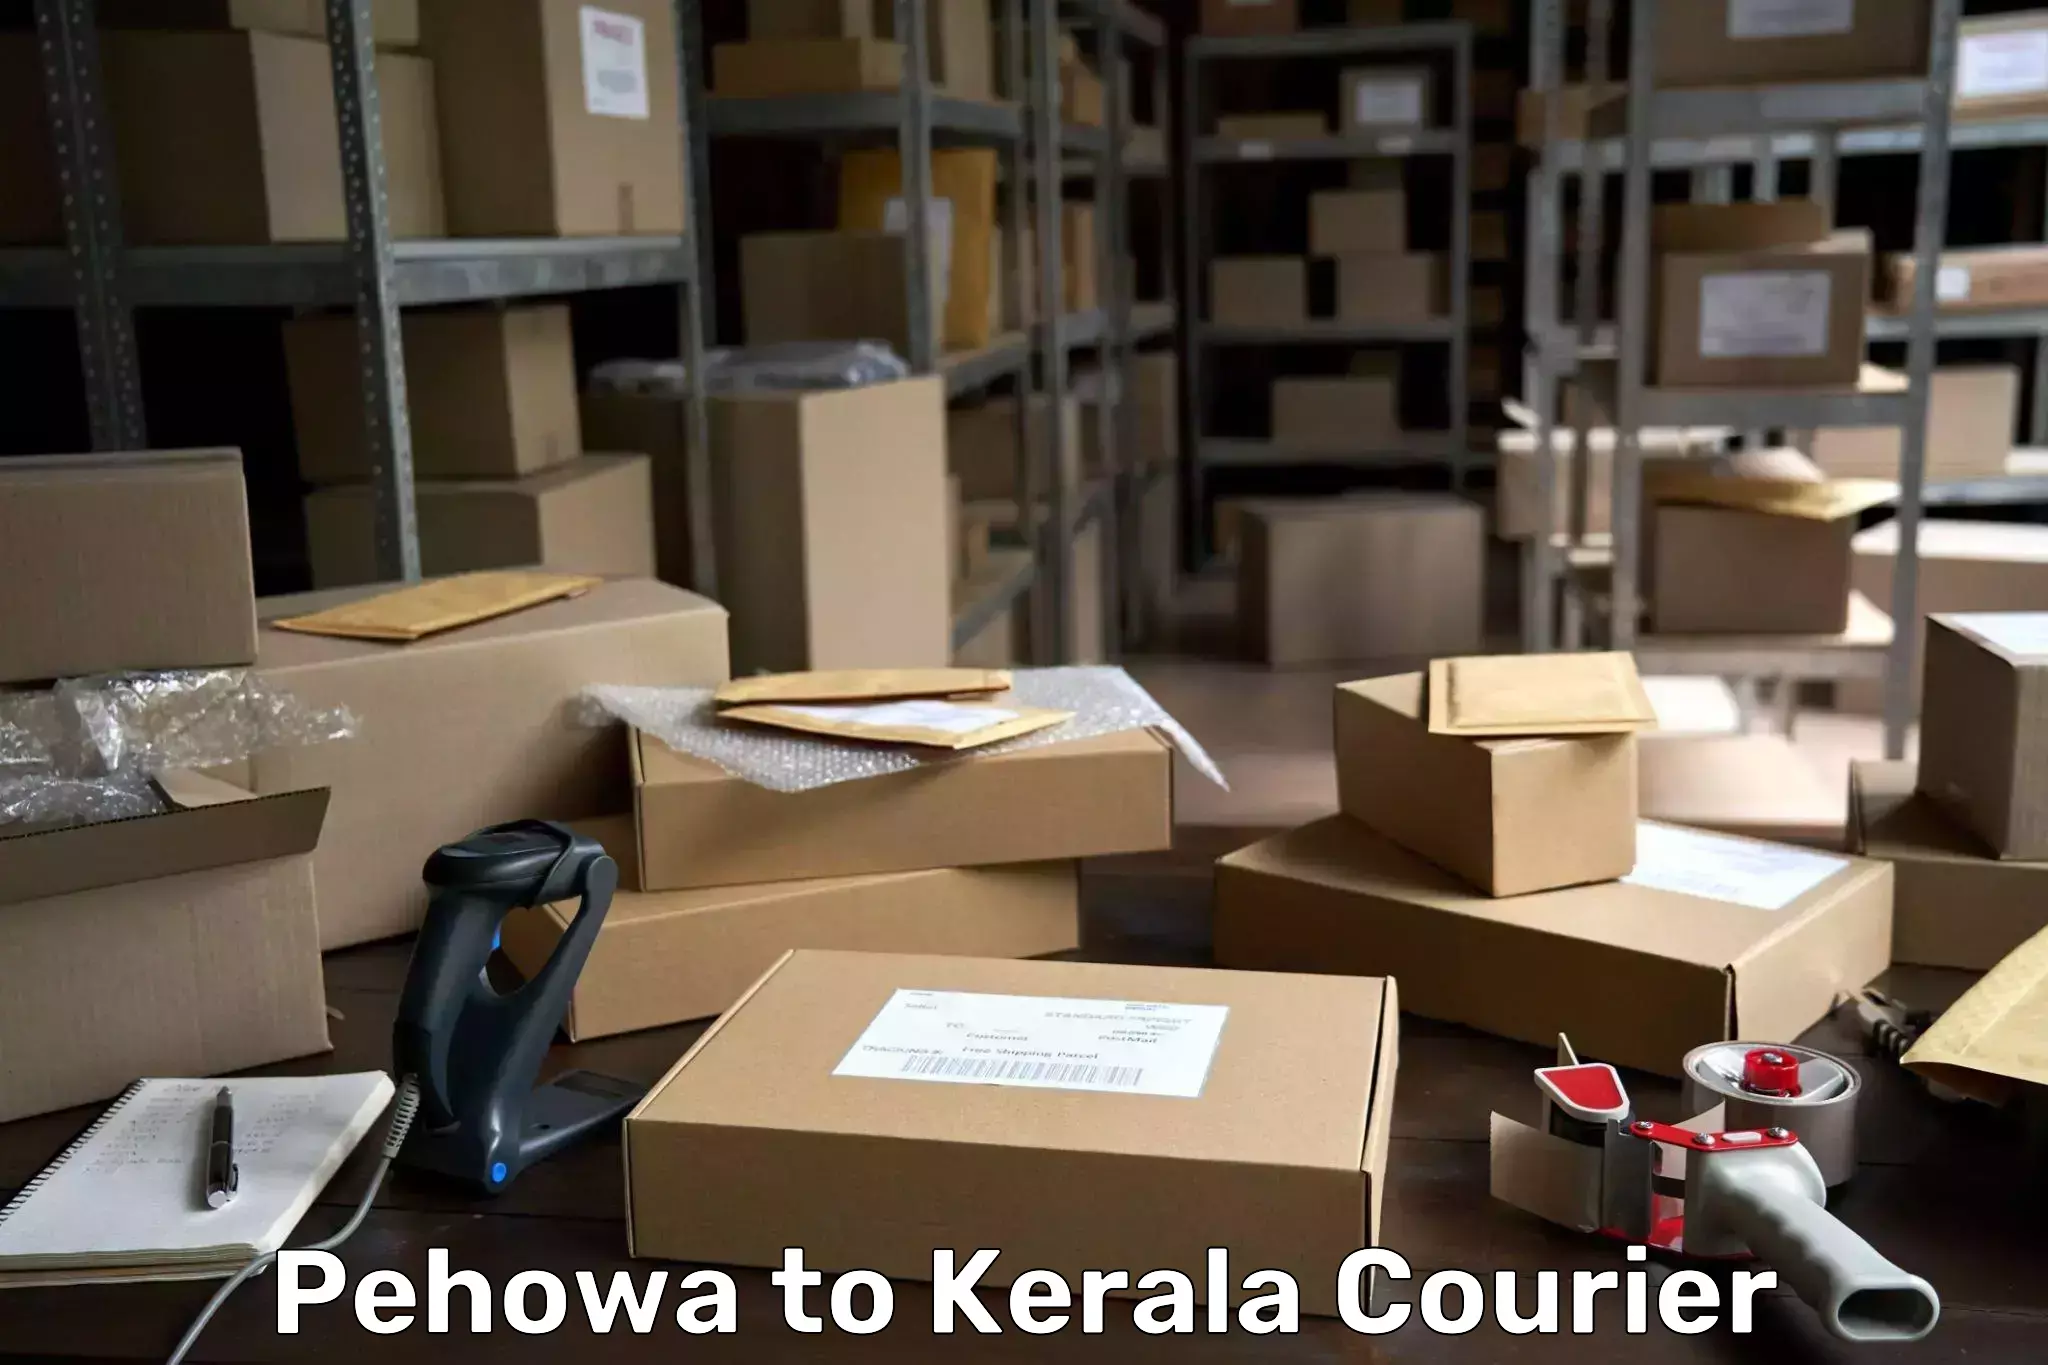 International courier networks Pehowa to Kochi